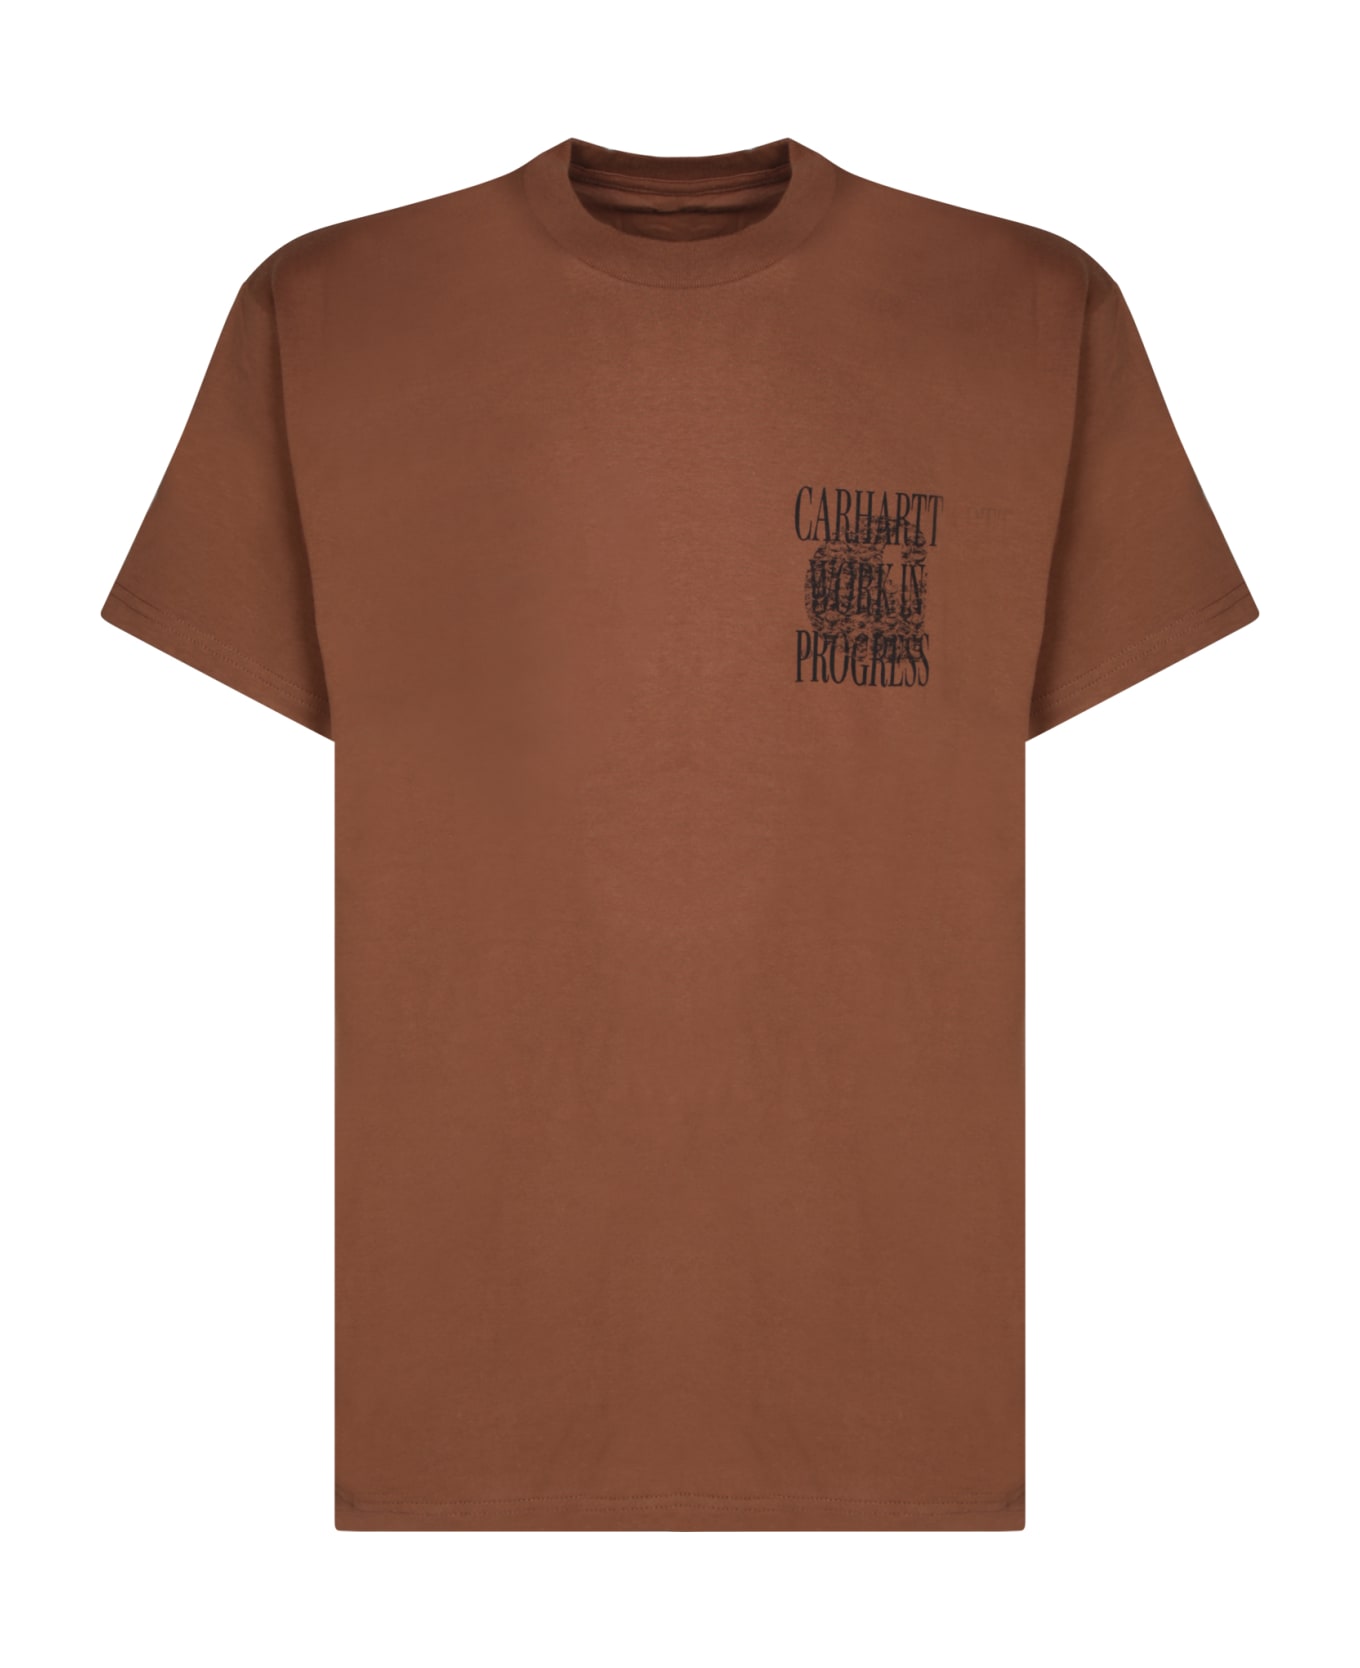 Carhartt Always A Wip Brown T-shirt - Brown